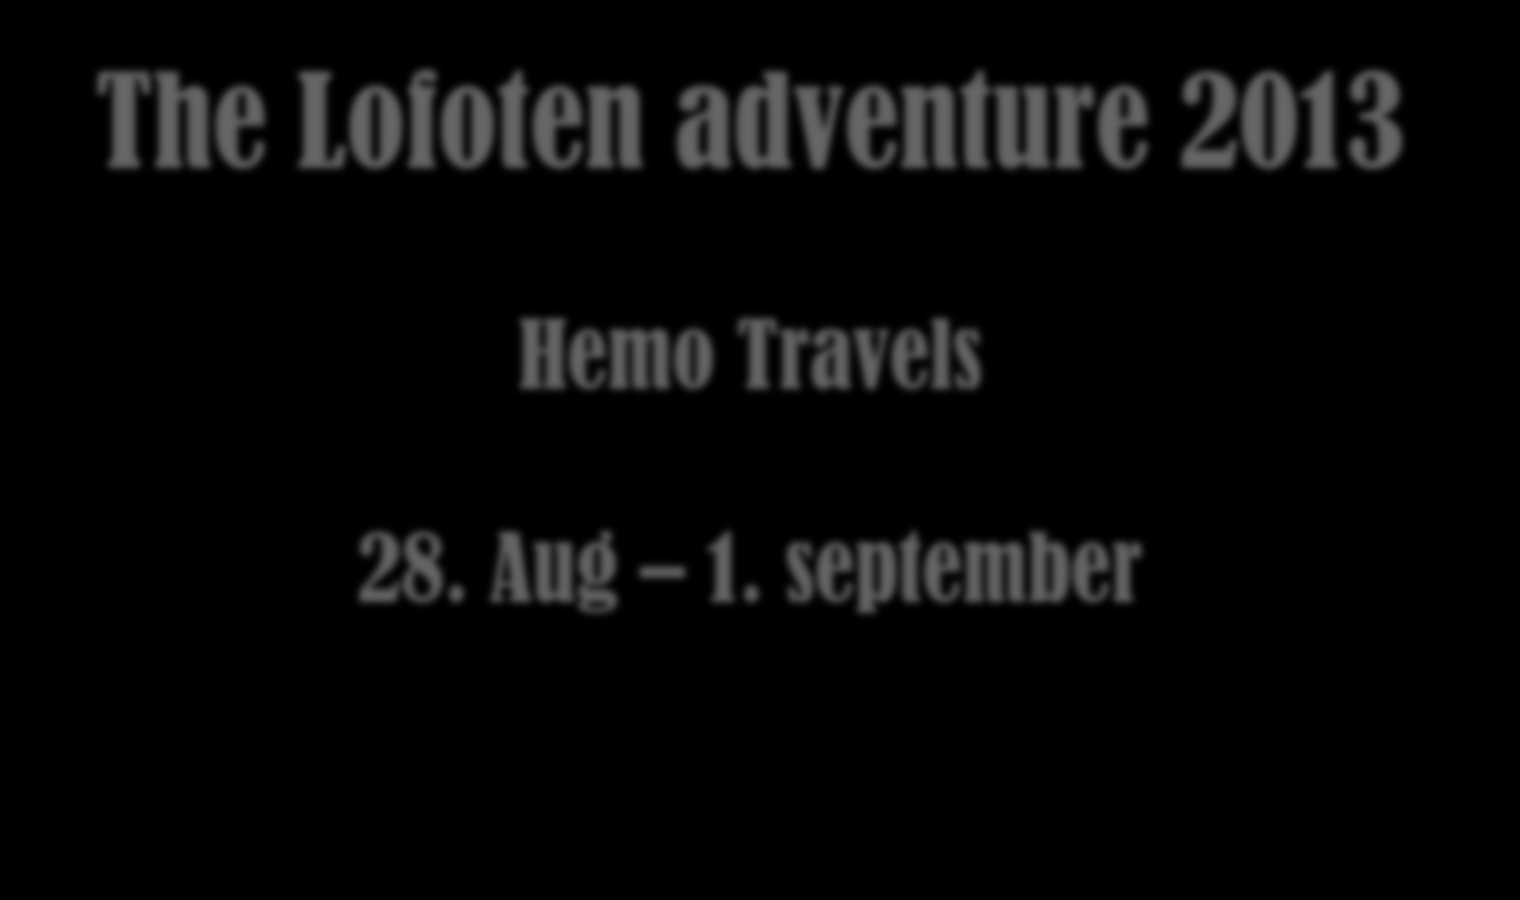 Hemo Travels 28.